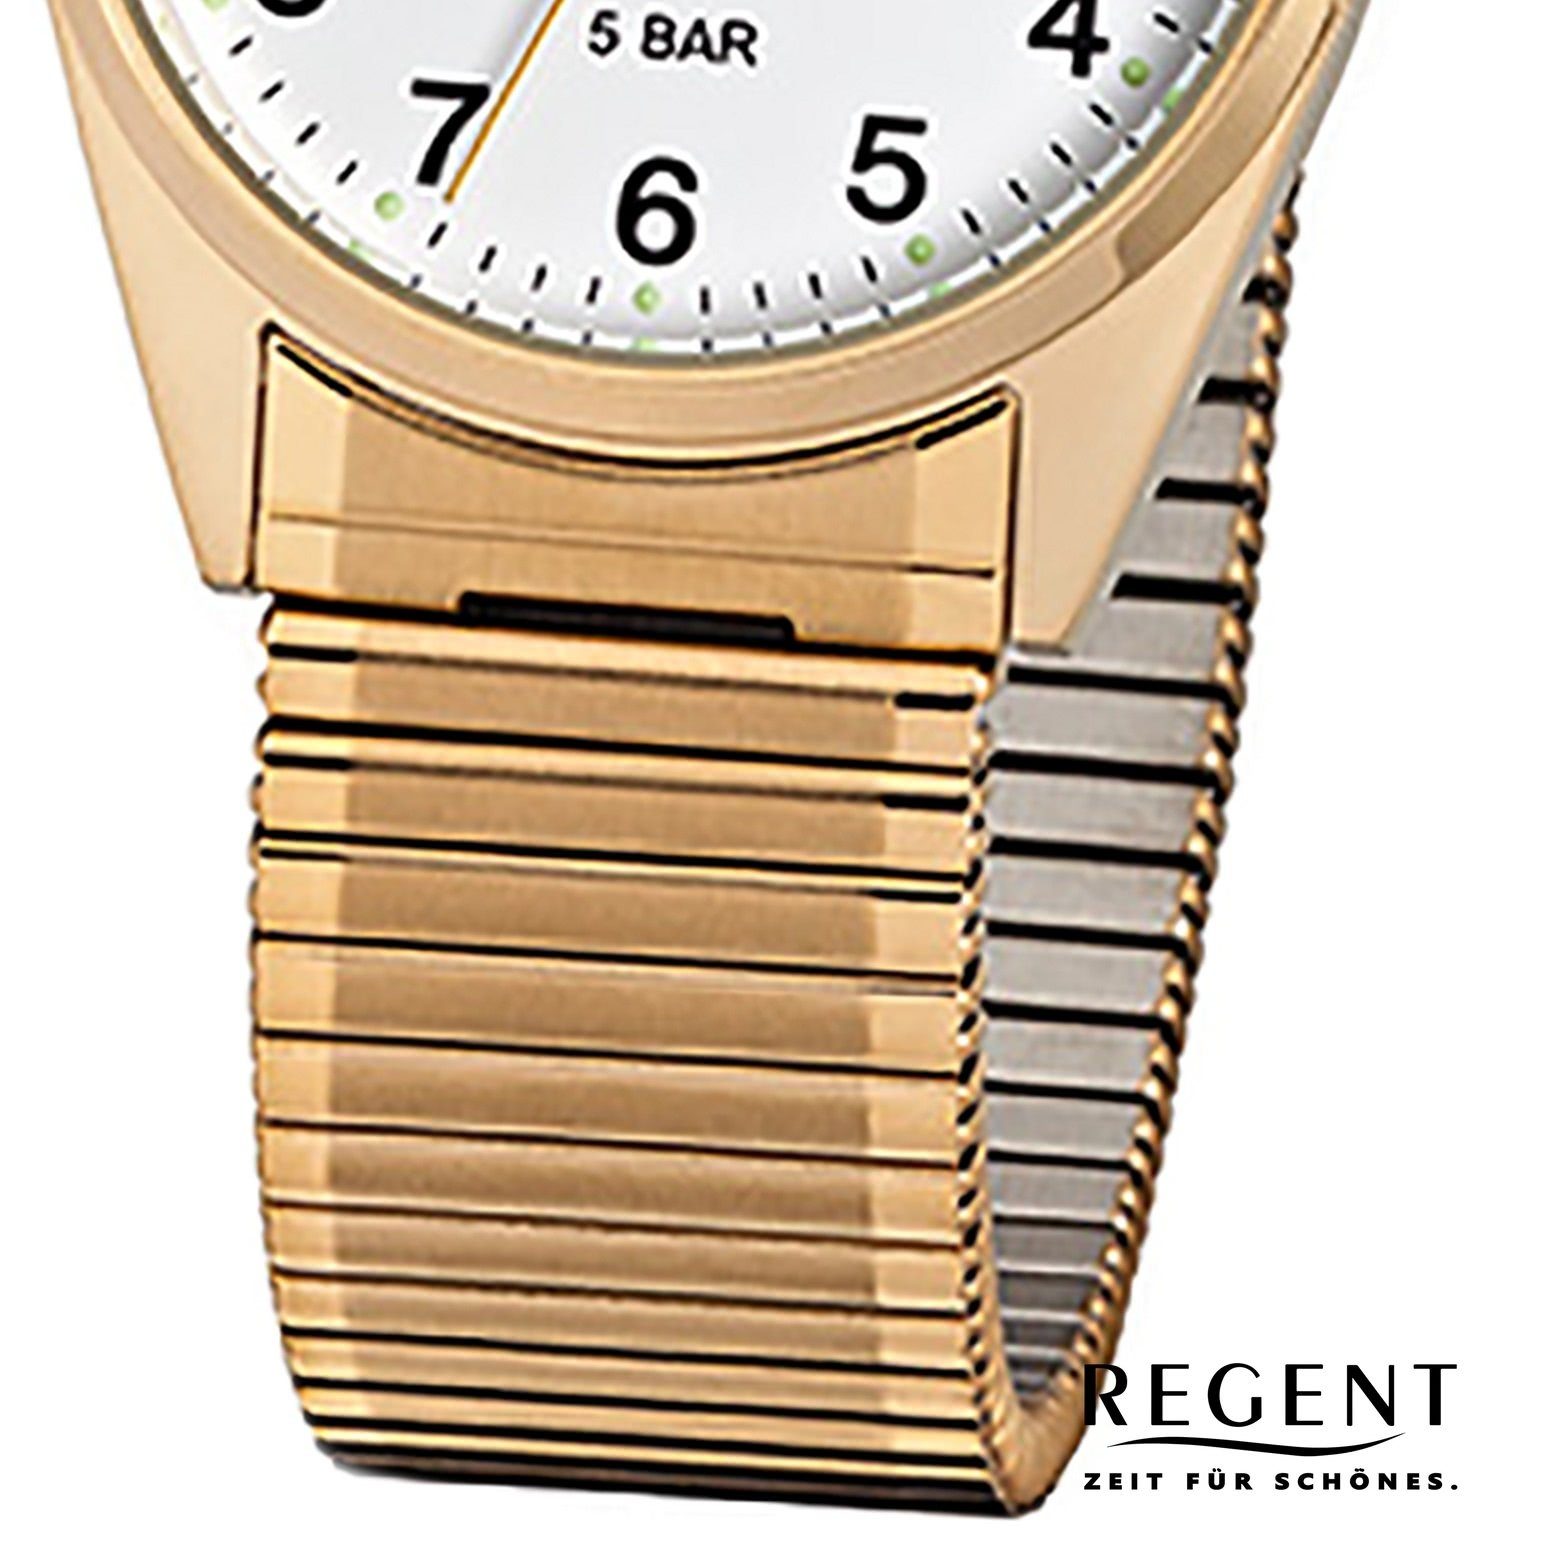 Edelstahlarmband Regent (ca. Herren-Armbanduhr F-293, Quarzuhr gold rund, Regent Analog Armbanduhr 33mm), Herren mittel